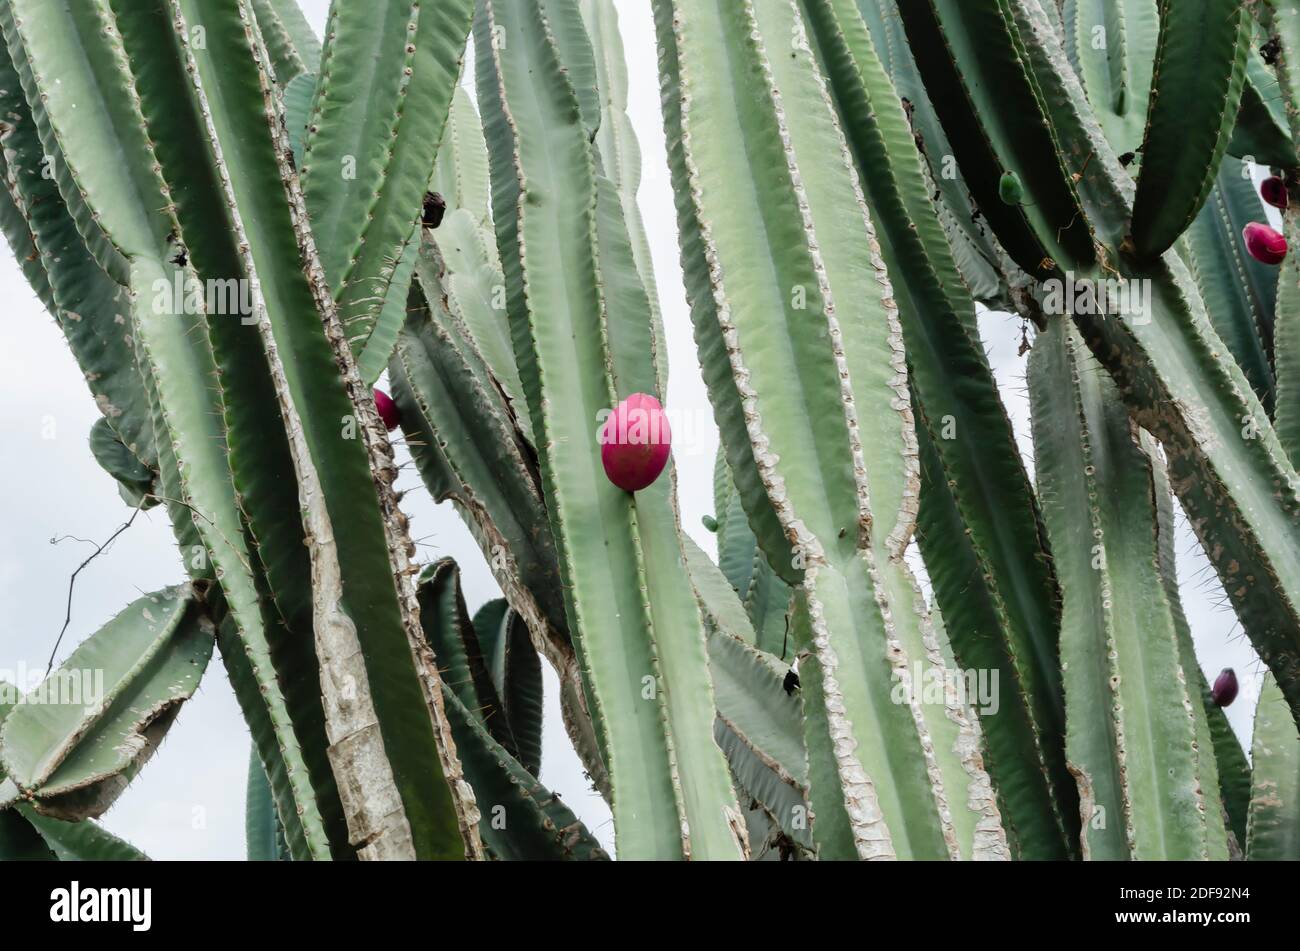 Peruvian Apple On Cactus Plant Stock Photo